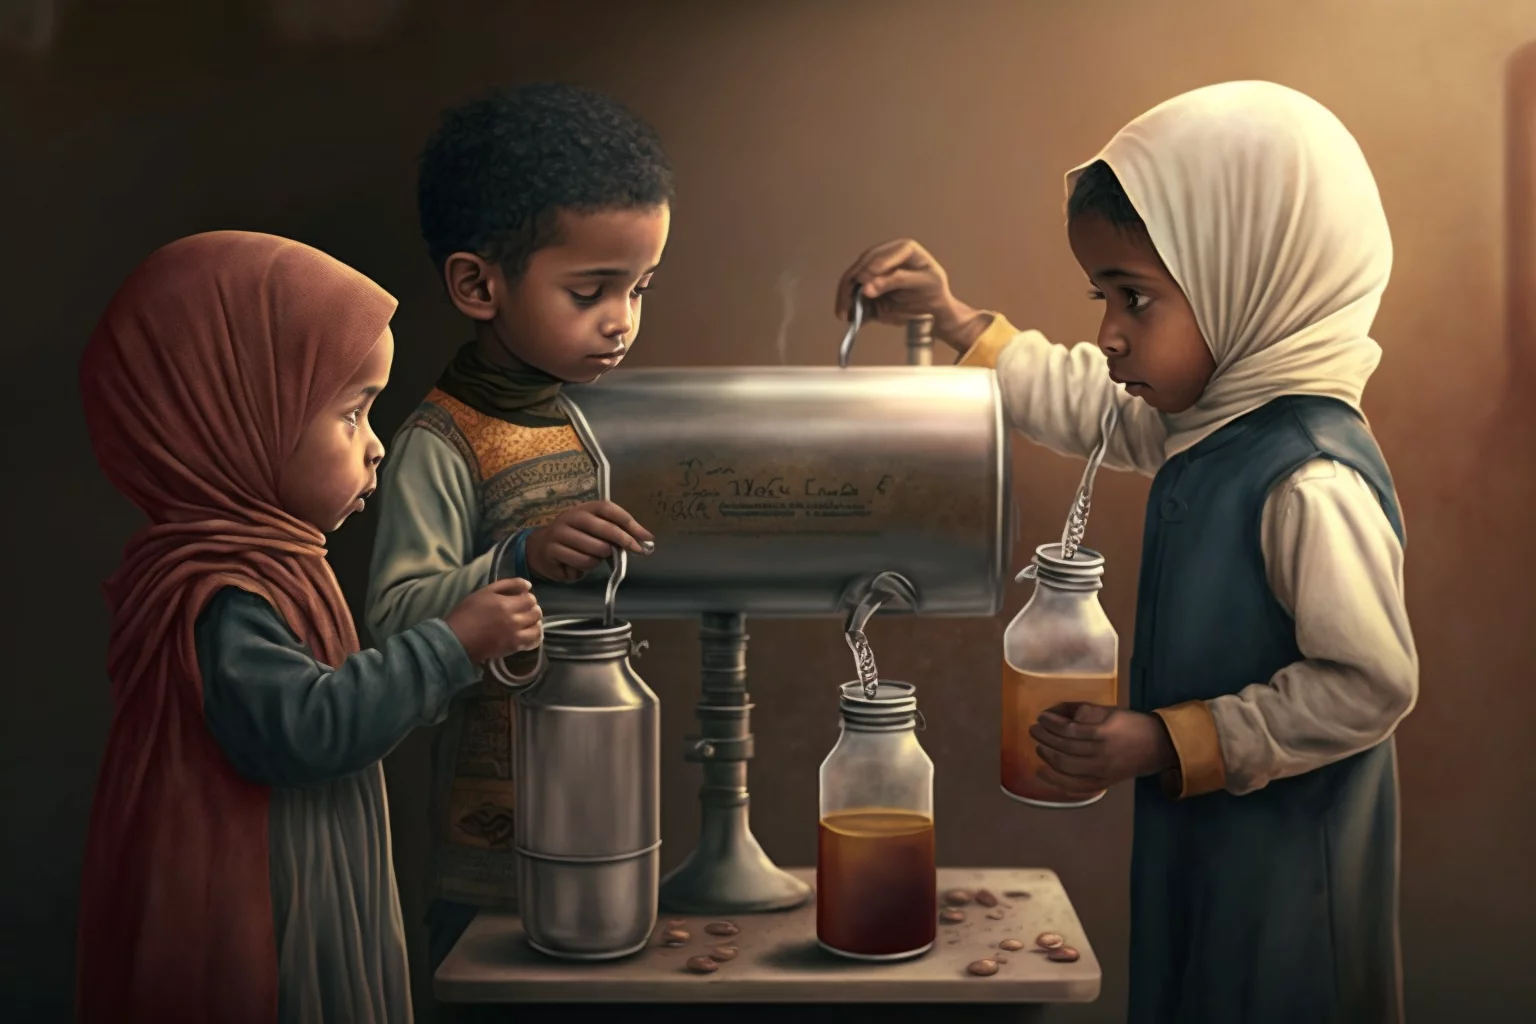 Muslim kids serve water